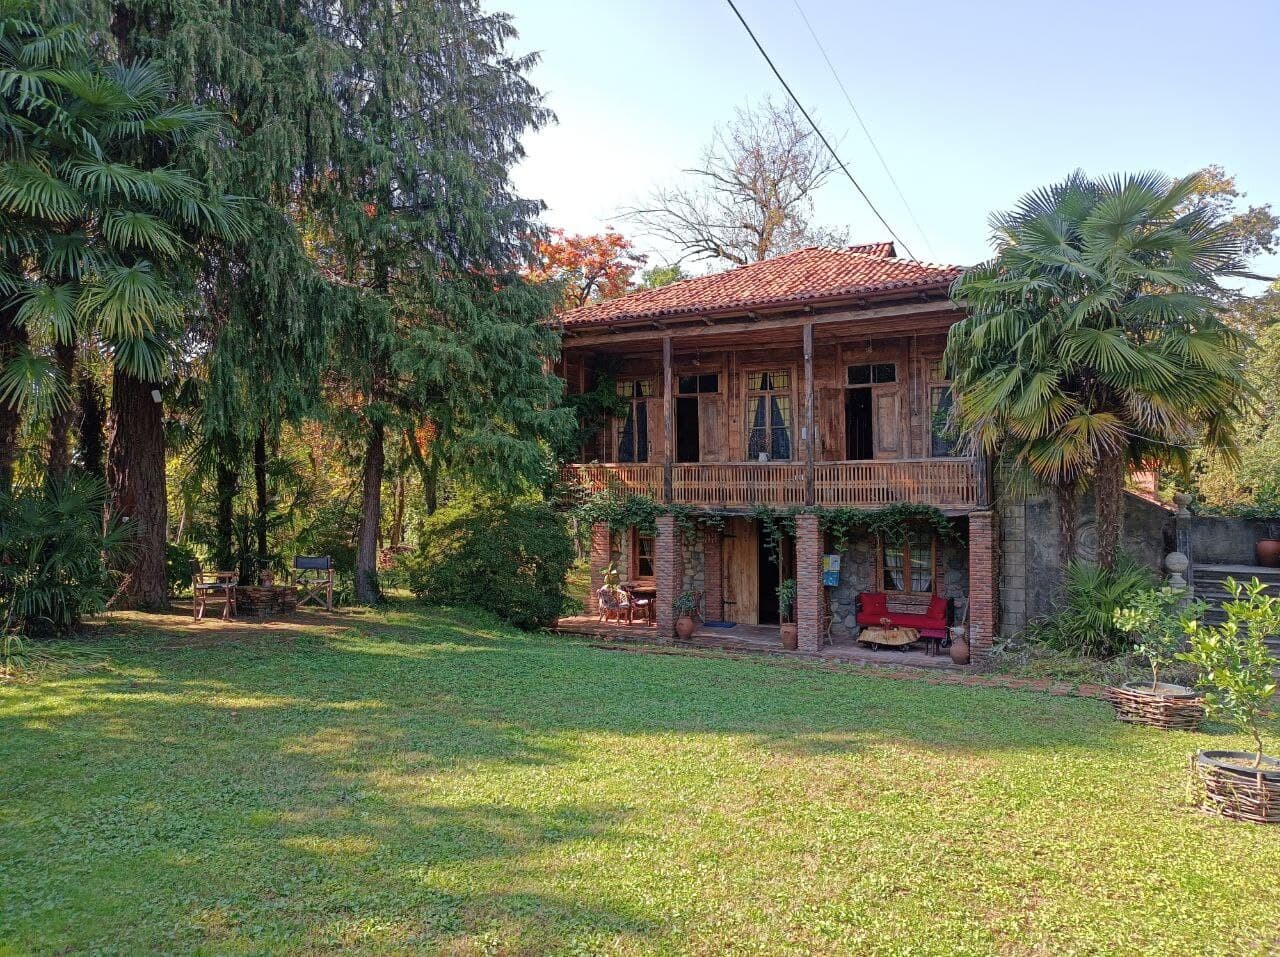 Local guesthouse in Guria, western region of Georgia